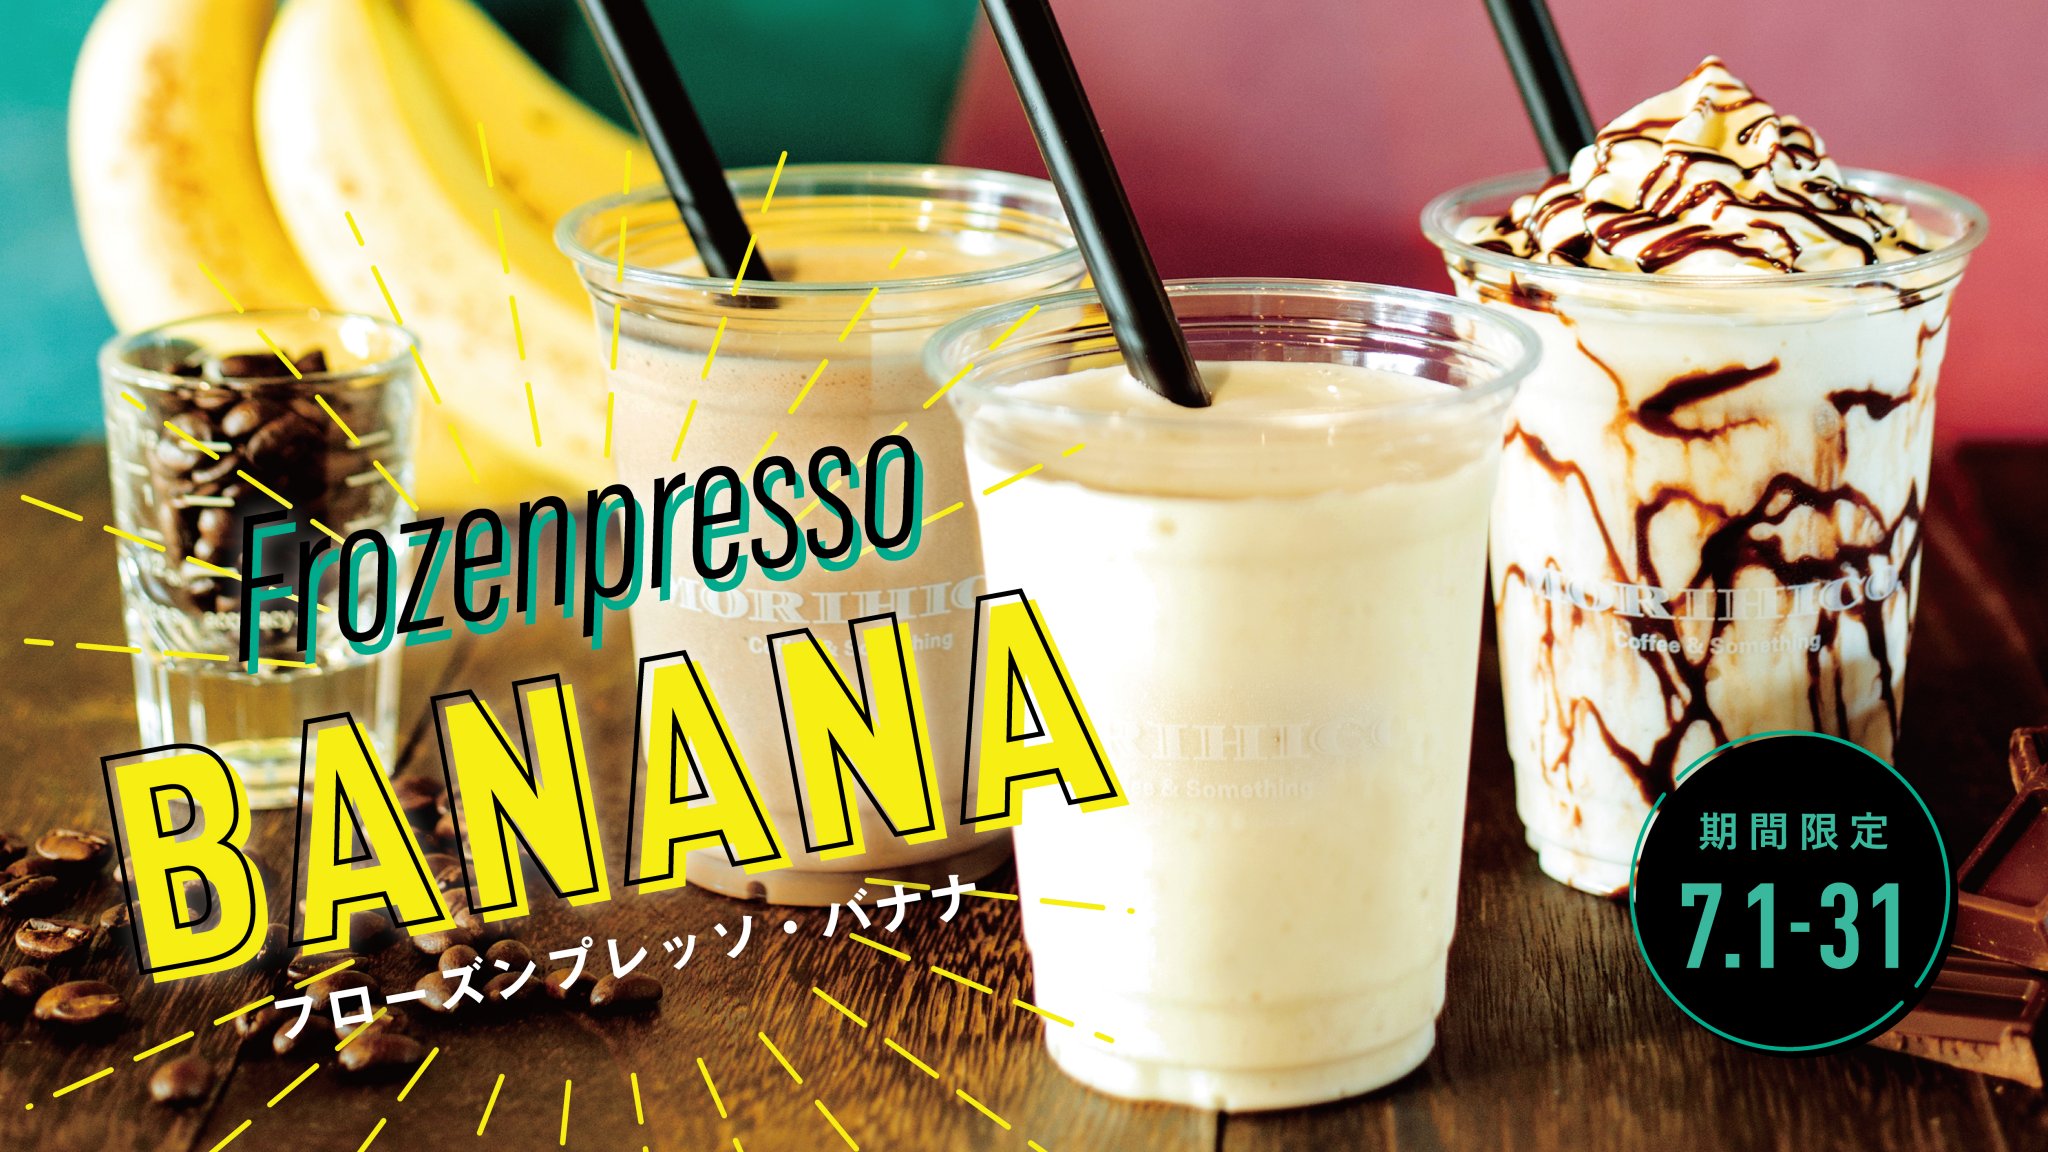 【MORIHICO.】バナナをまるごと絞ったような濃厚な風味を楽しめる『フローズンプレッソ BANANA』を期間限定で発売。